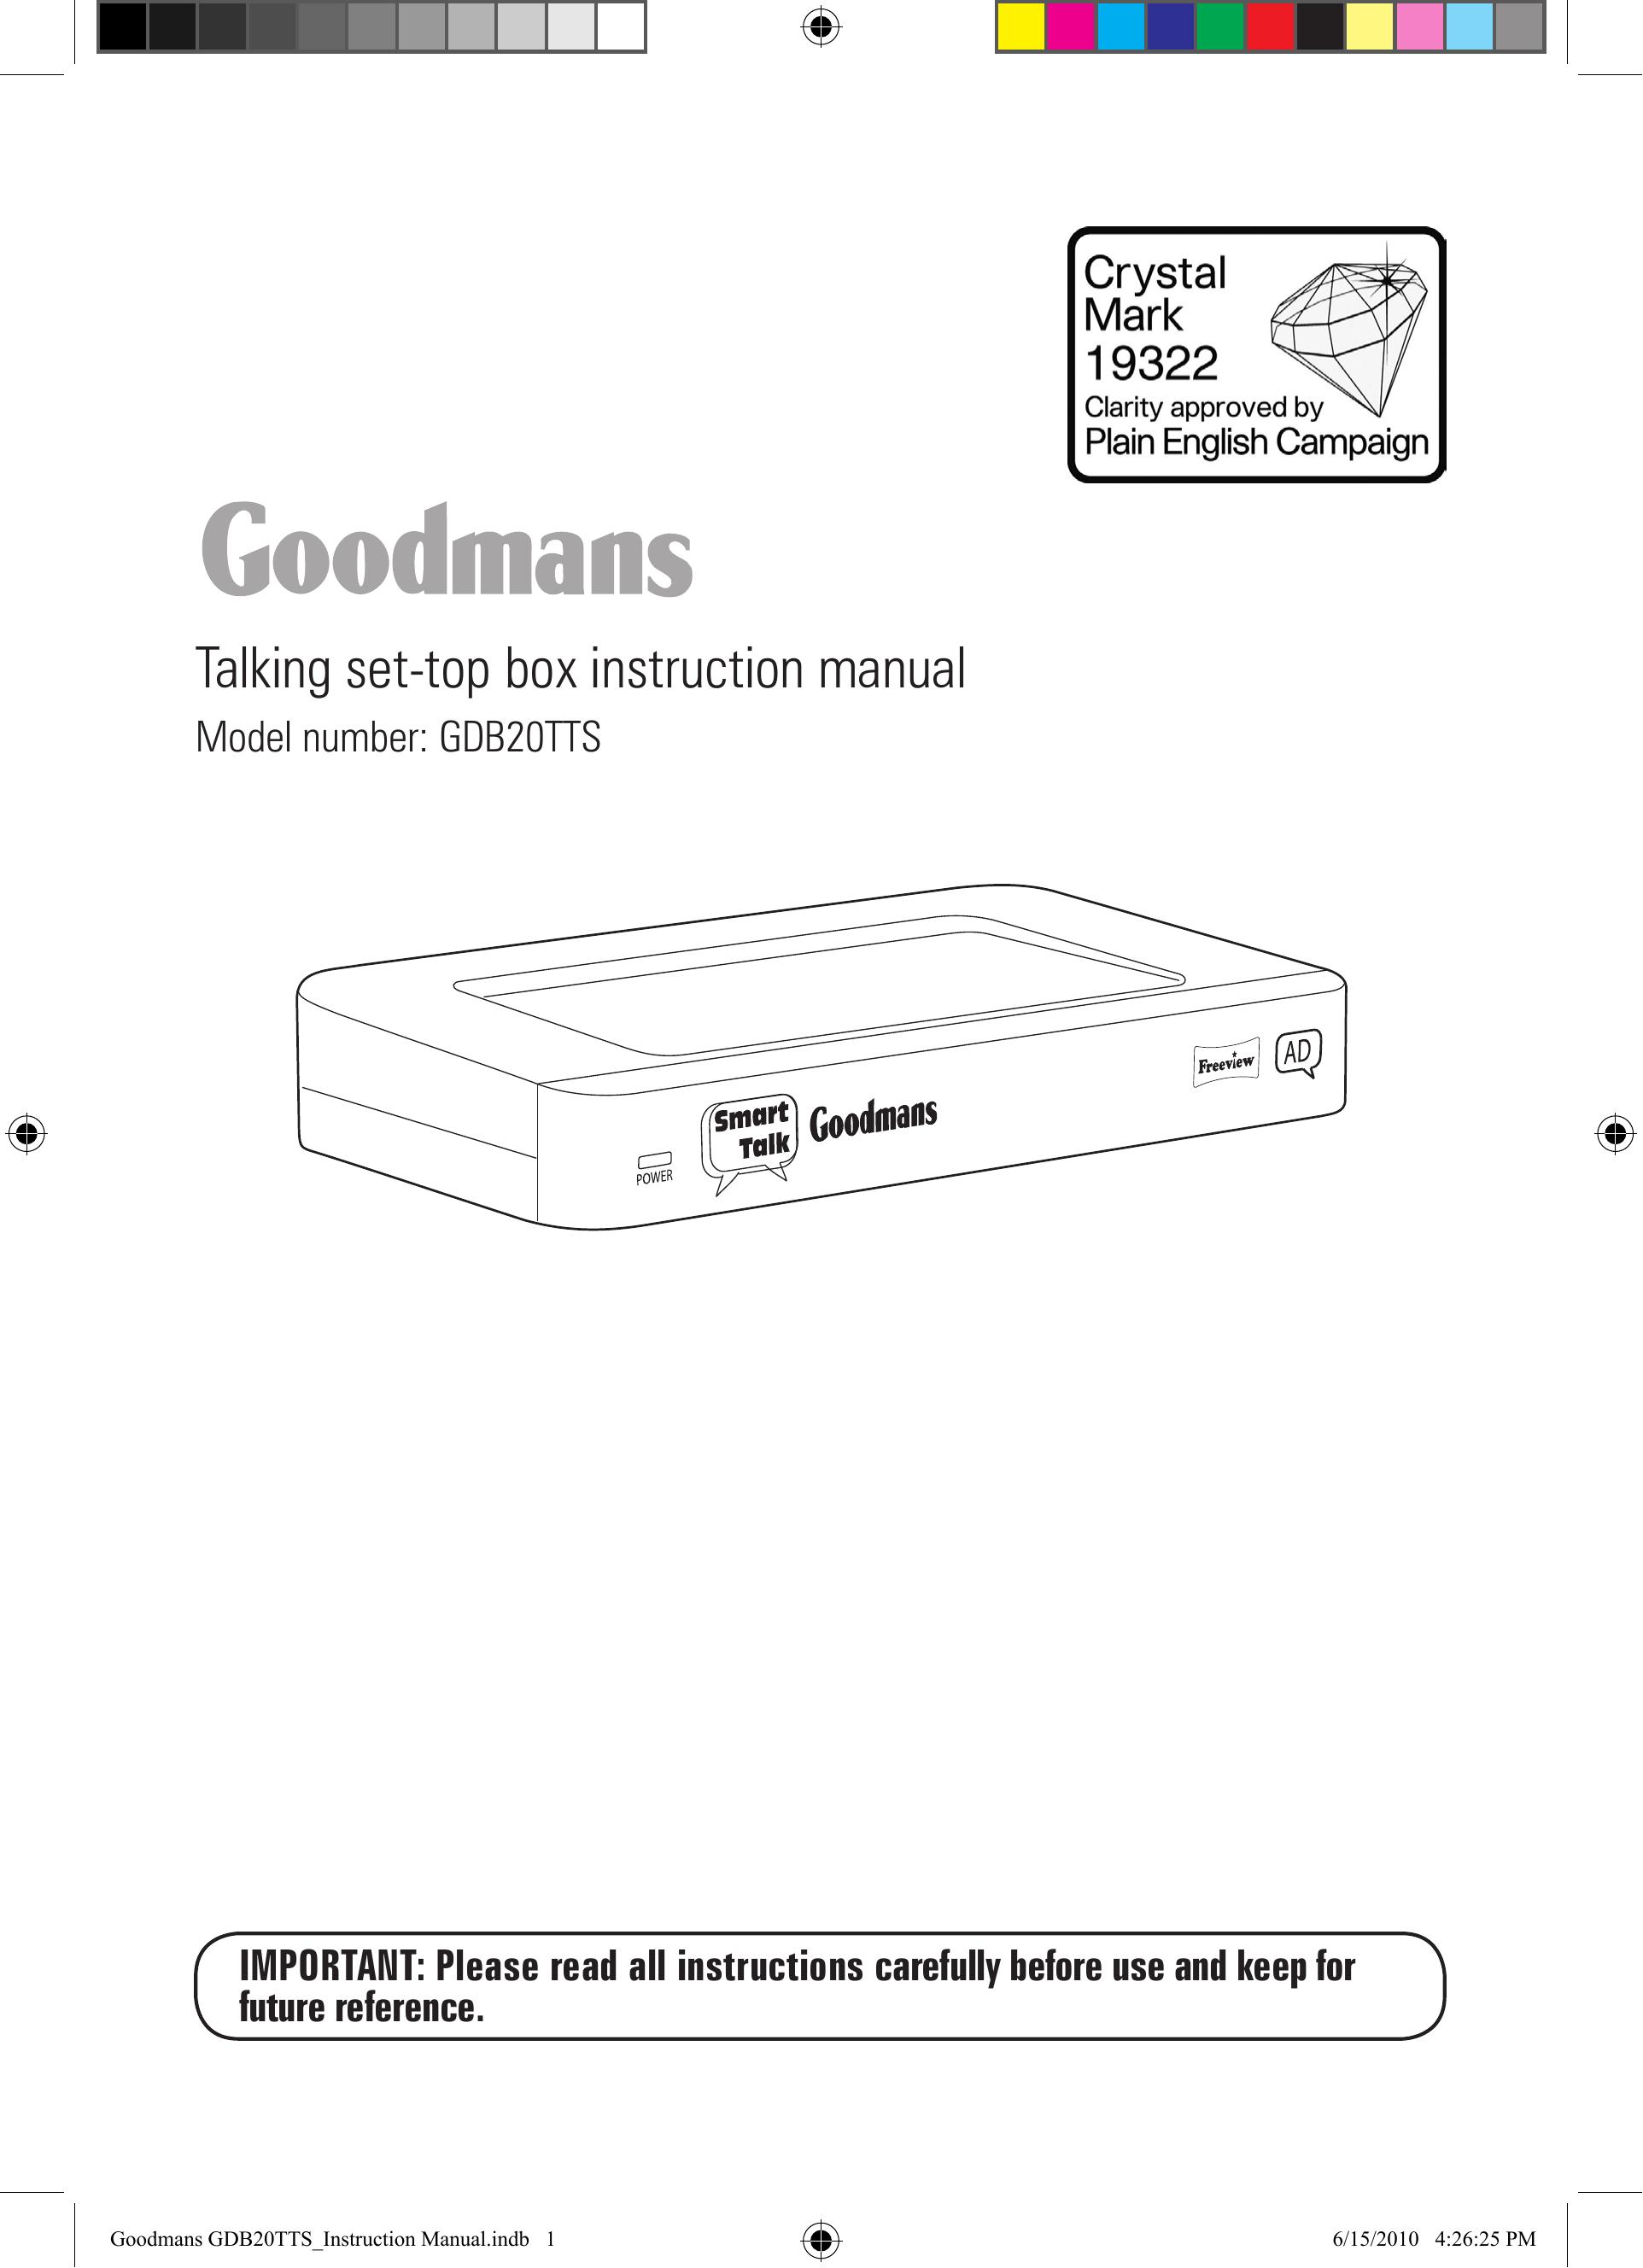 Goodmans GDB20TTS Clothes Dryer User Manual